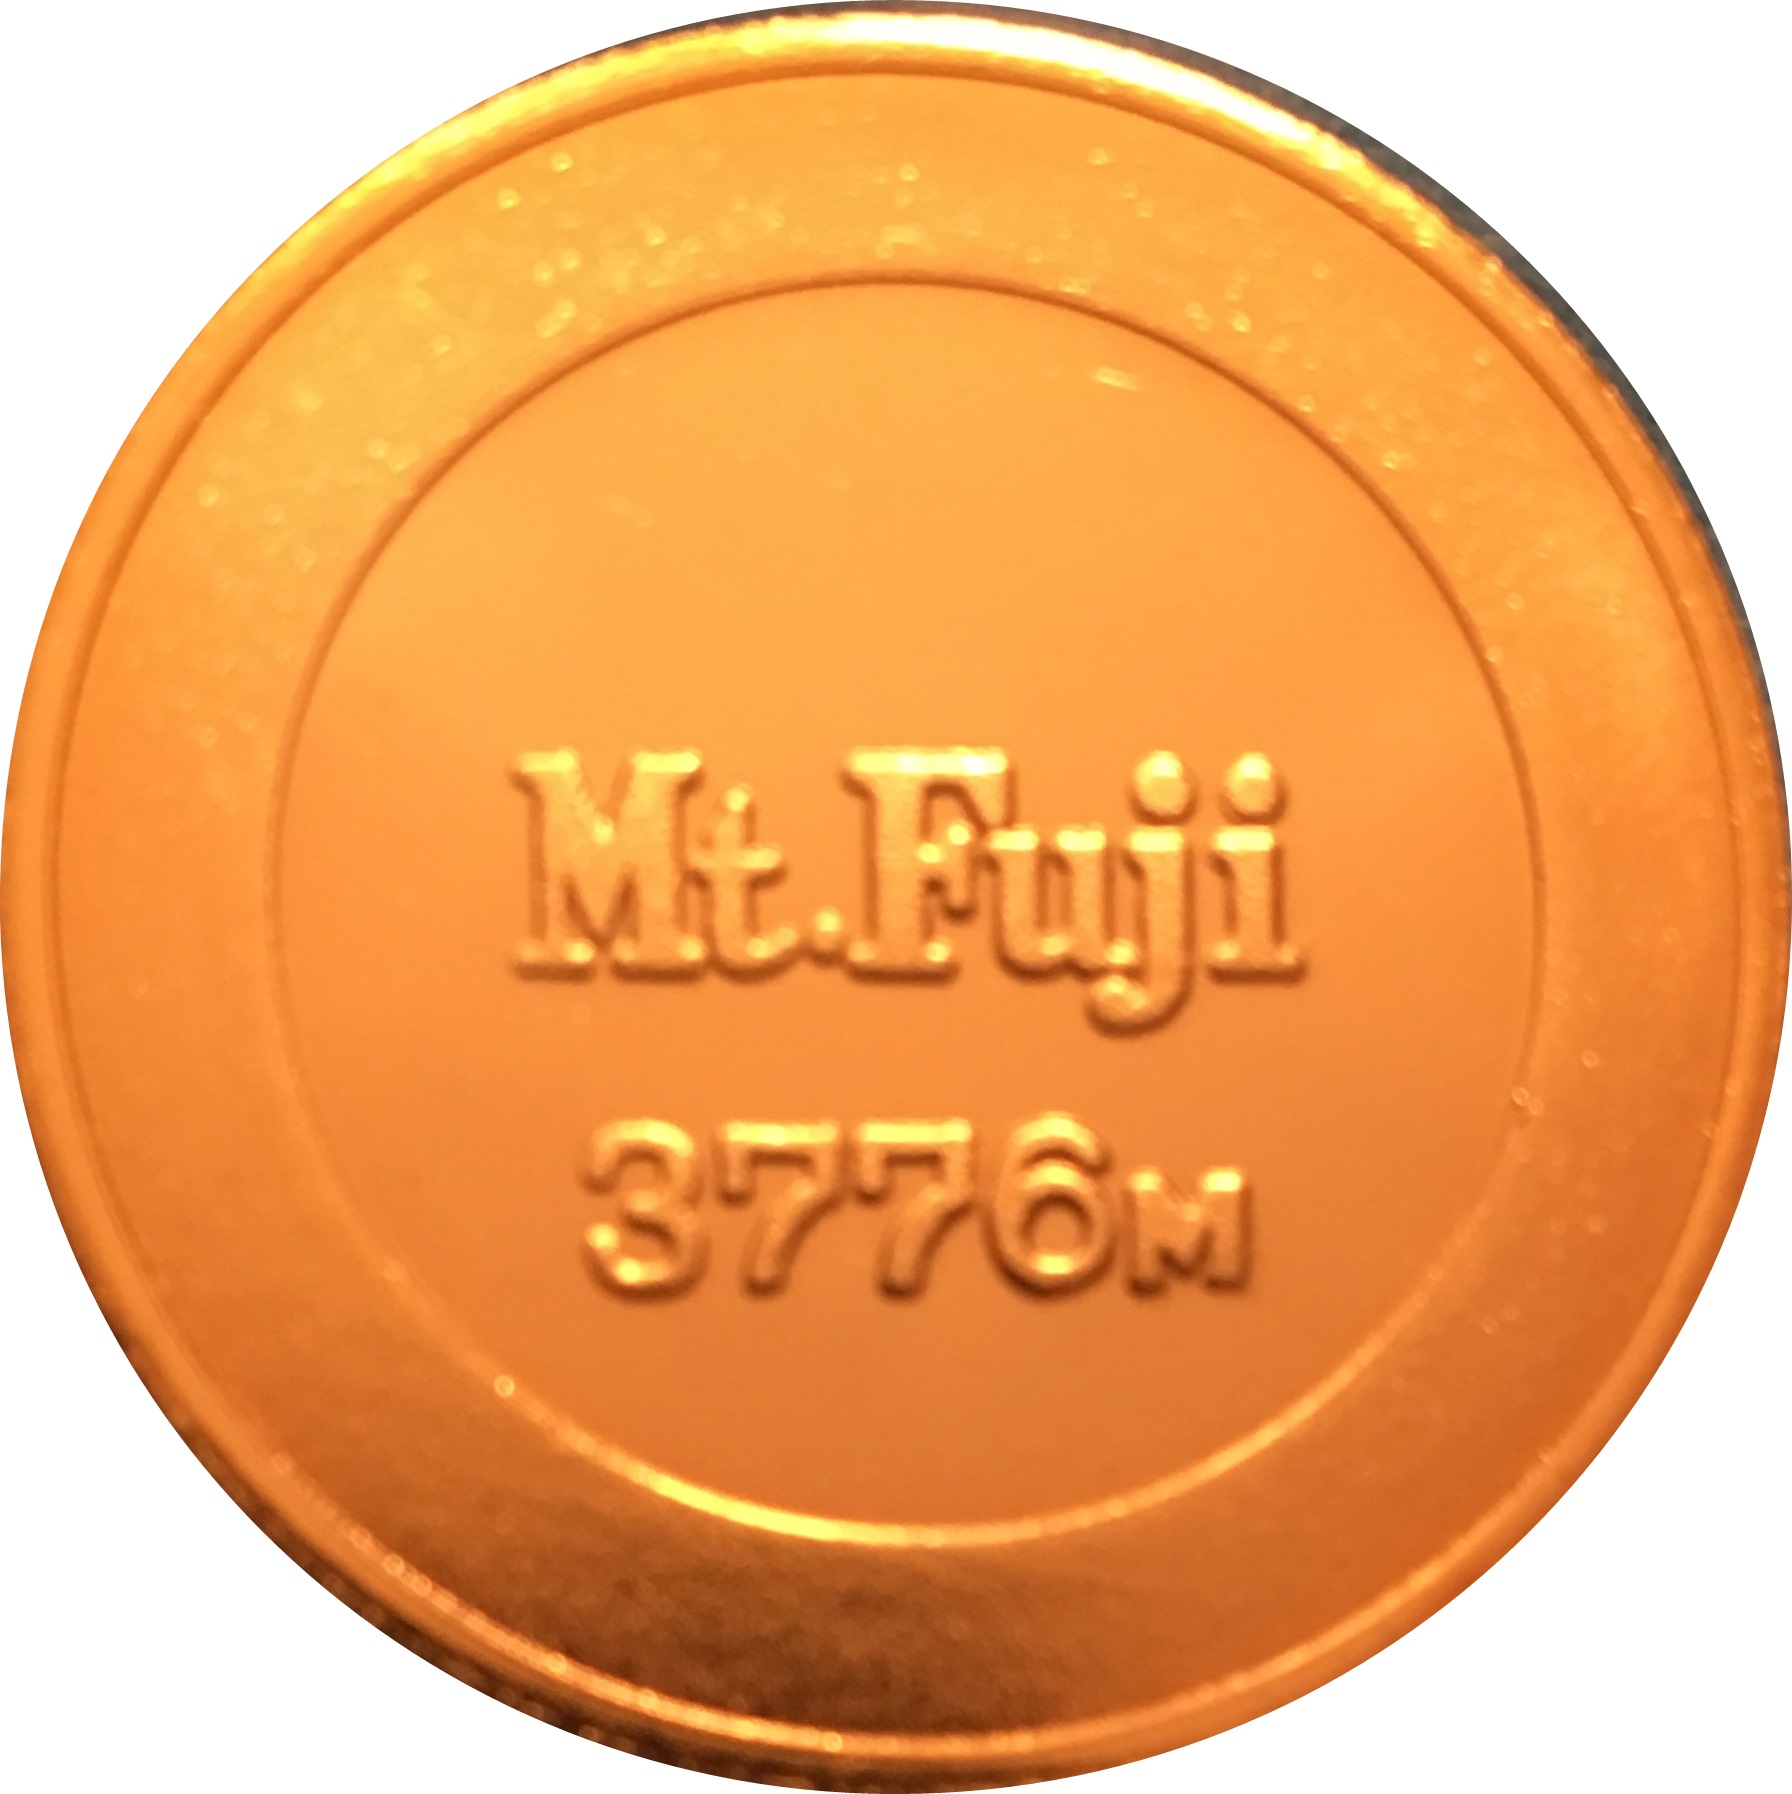 Mt Fuji coin back | Coins, Imprinting, Japan